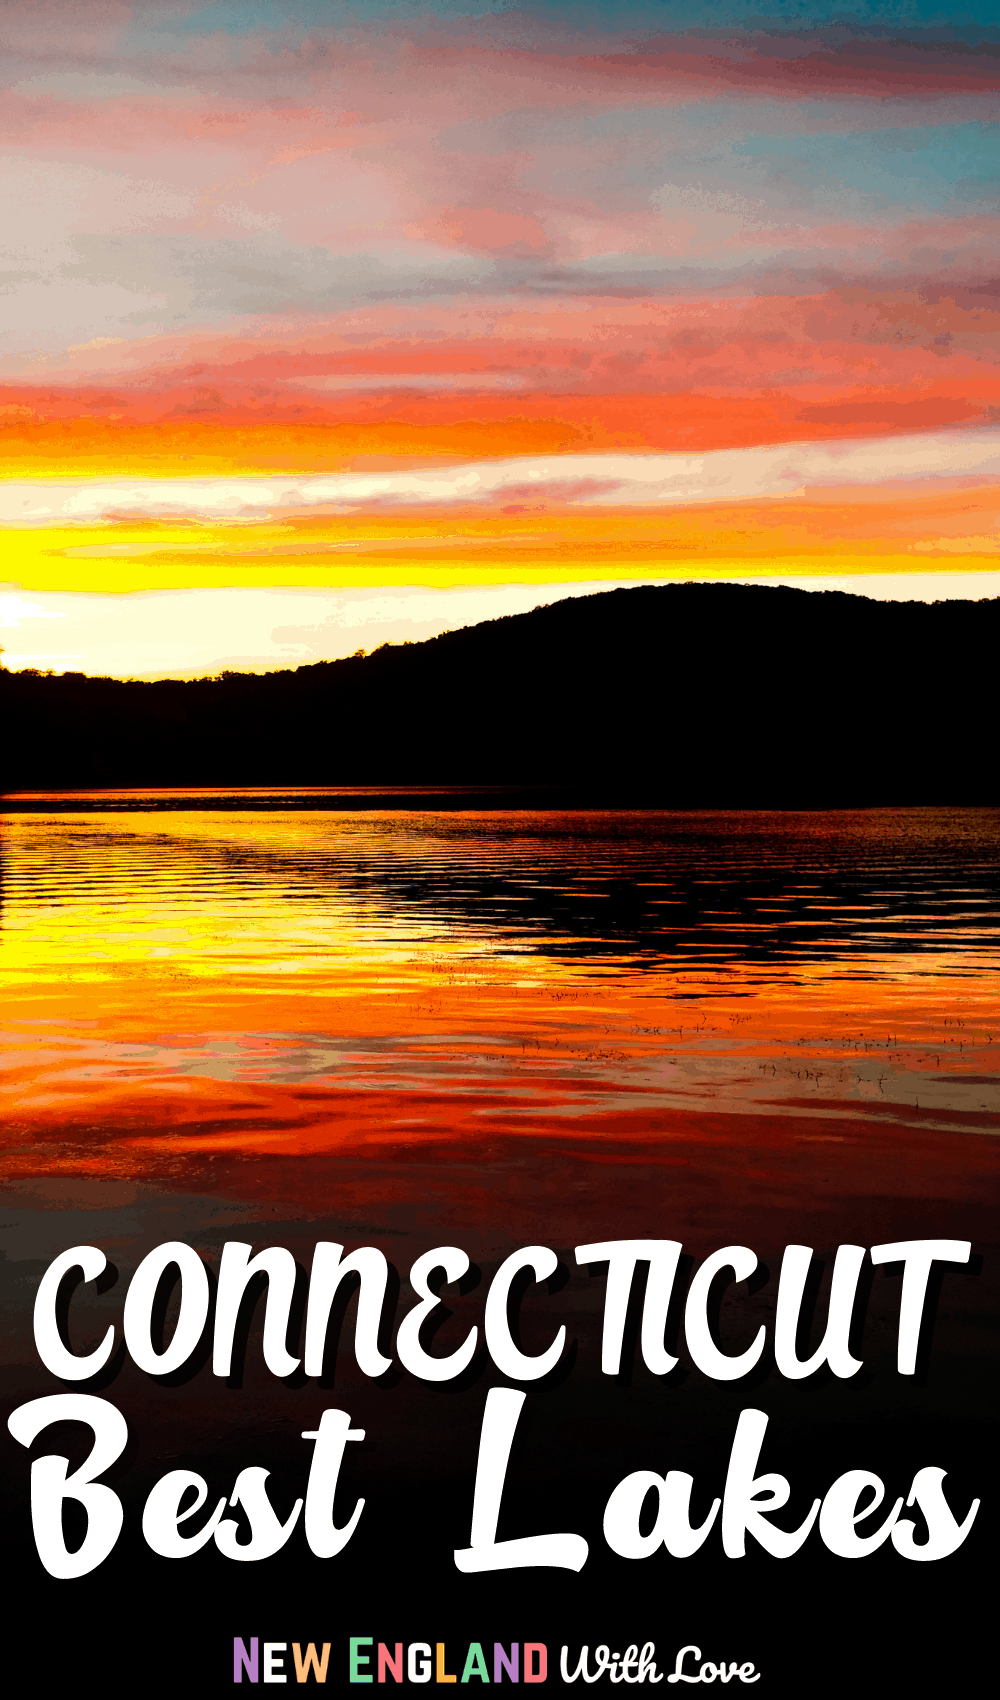 Pinterest graphic reading "Connecticut Best Lakes"